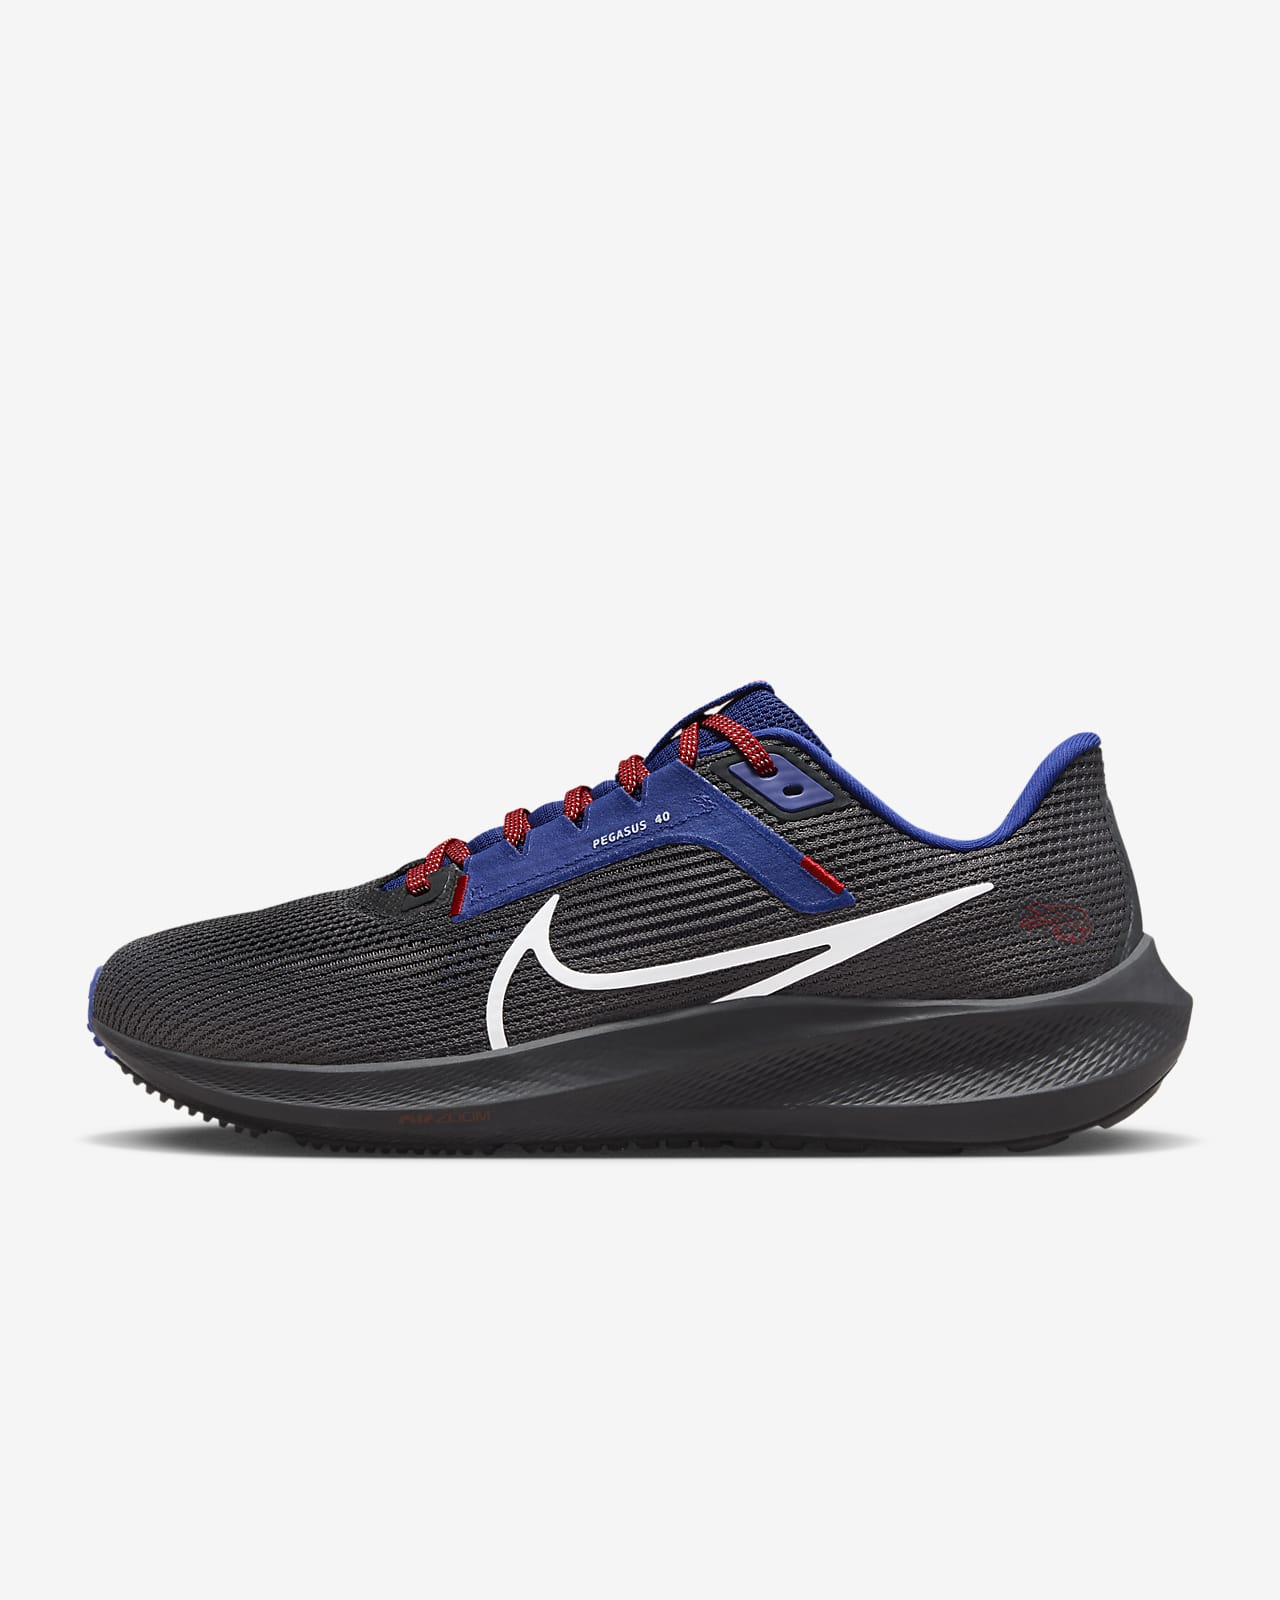 Nike Pegasus 40 (NFL Buffalo Bills) Men's Road Running Shoes